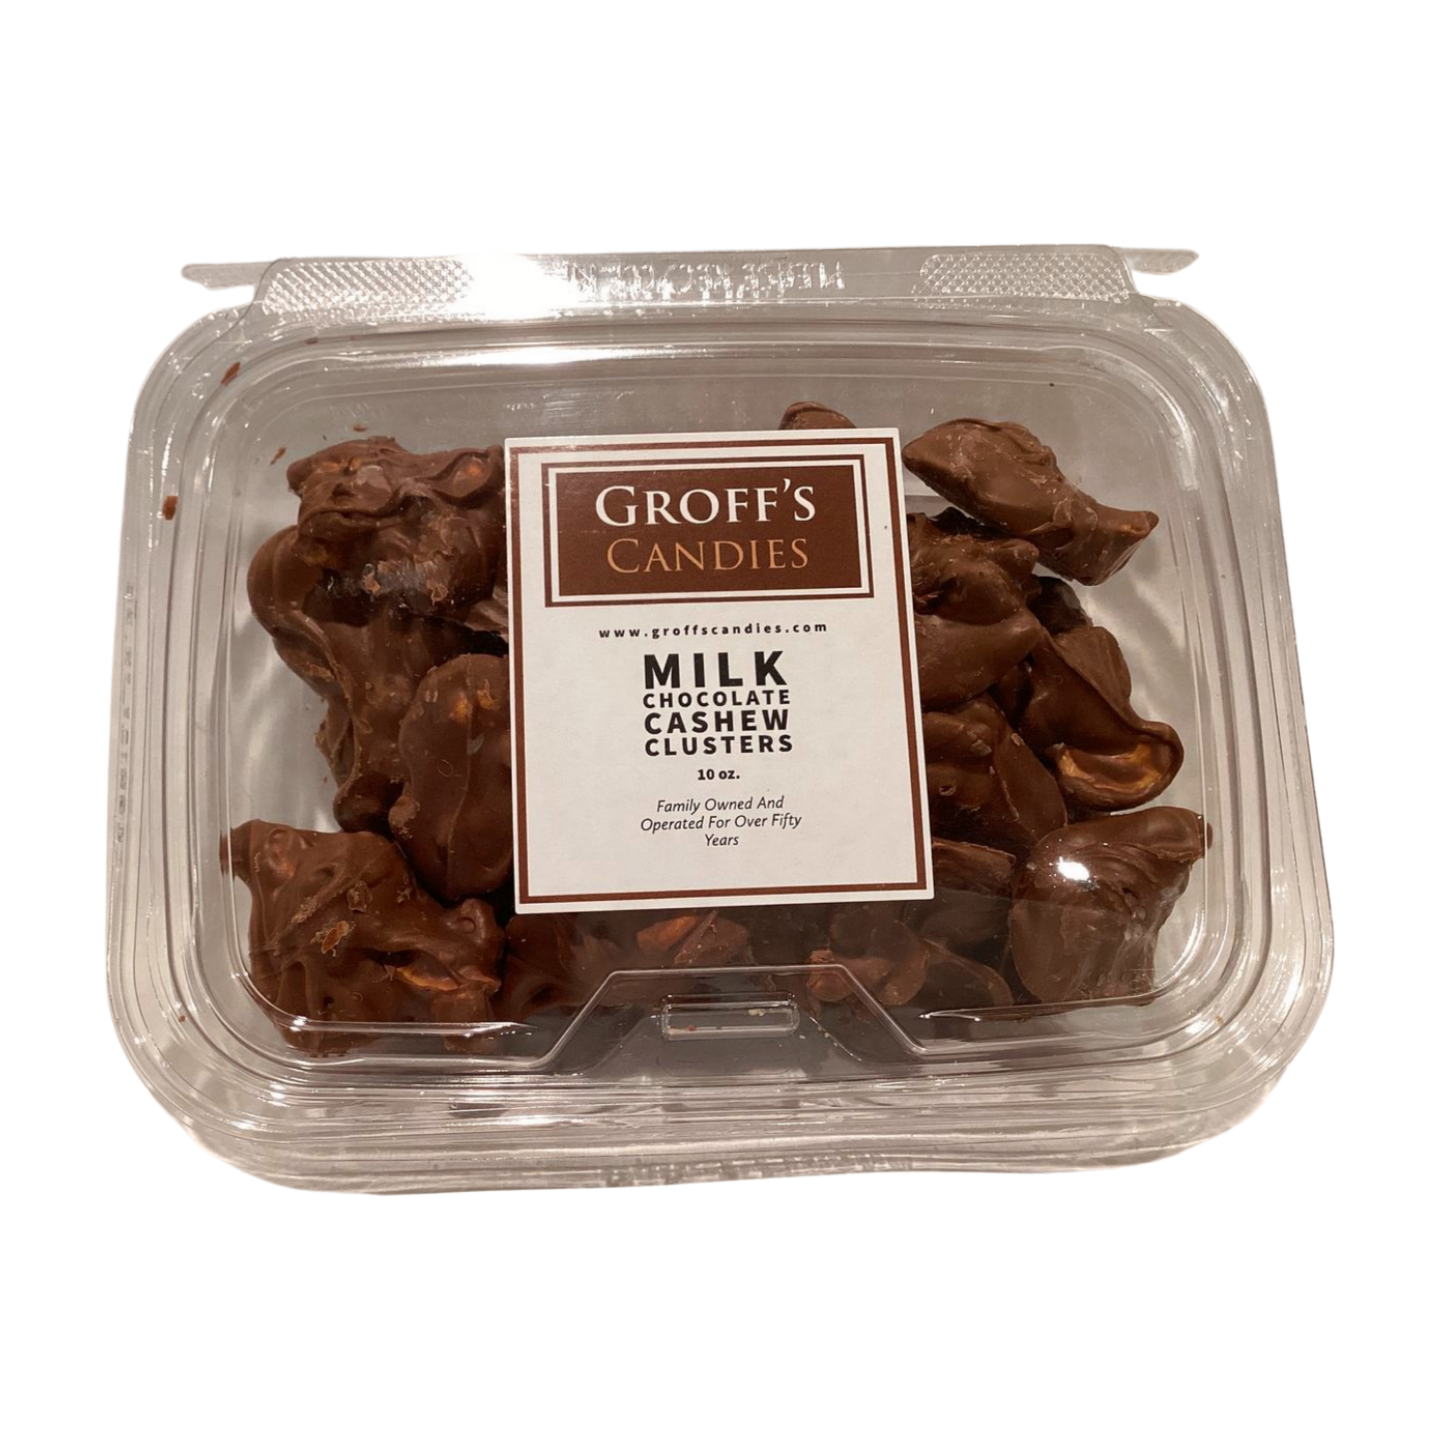 Groff’s Candies Milk Chocolate Cashew Clusters